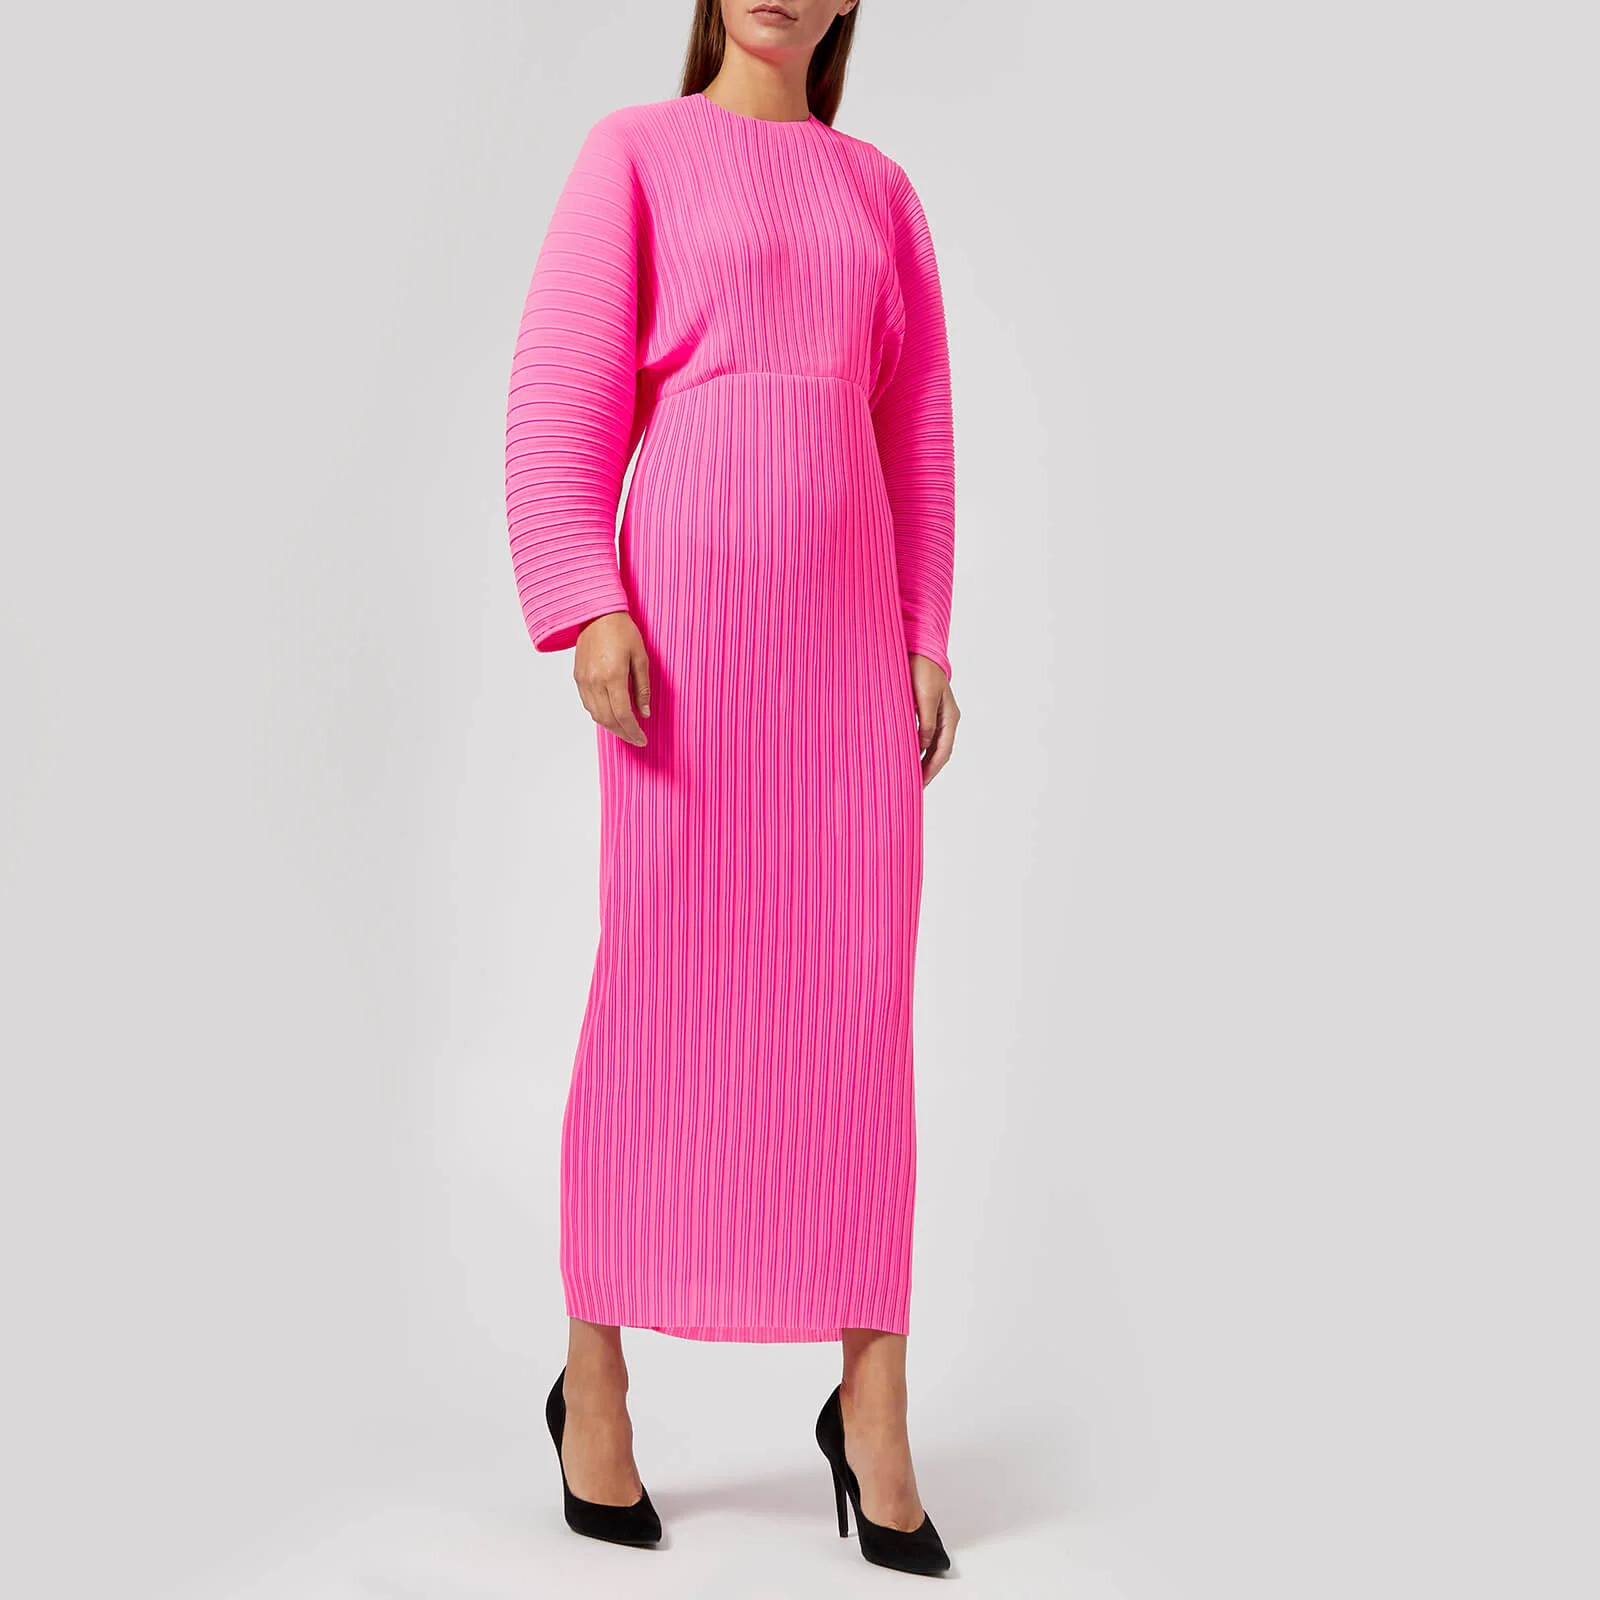 Solace London Women's Mirabelle Dress - Hot Pink Image 1